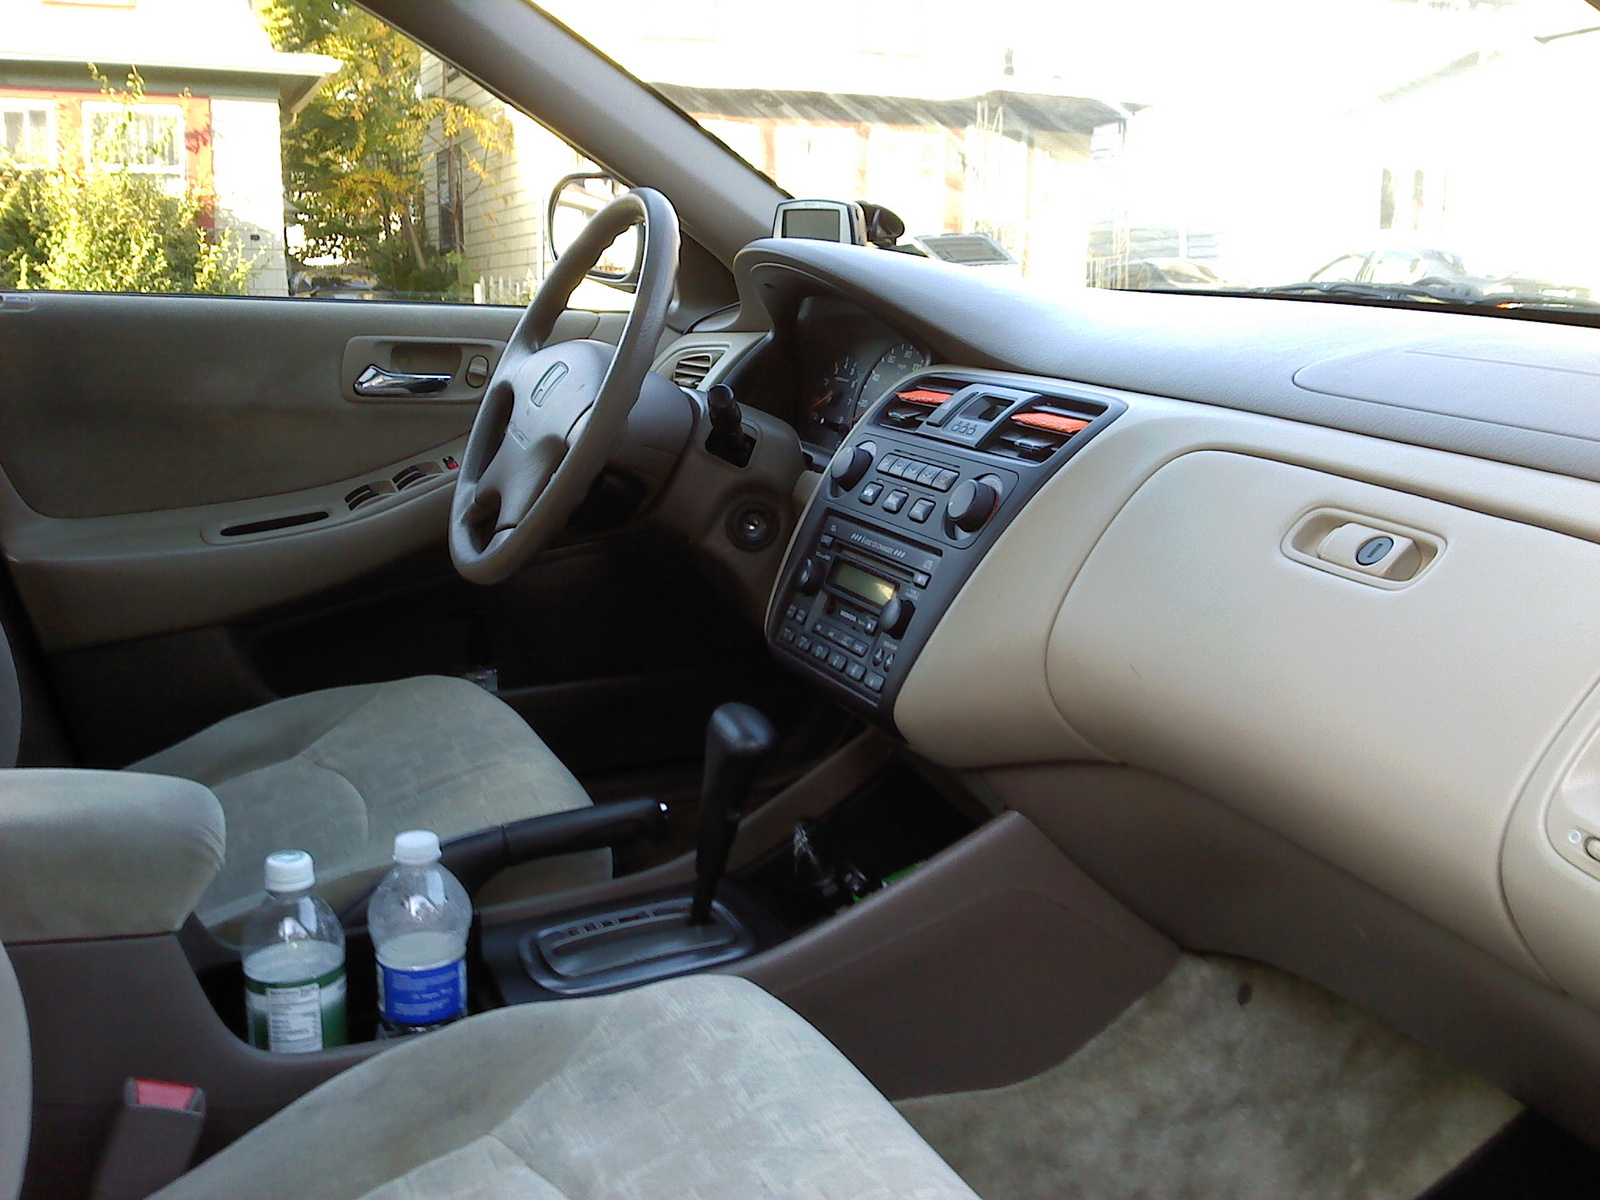 2002 Honda accord leather interior #1